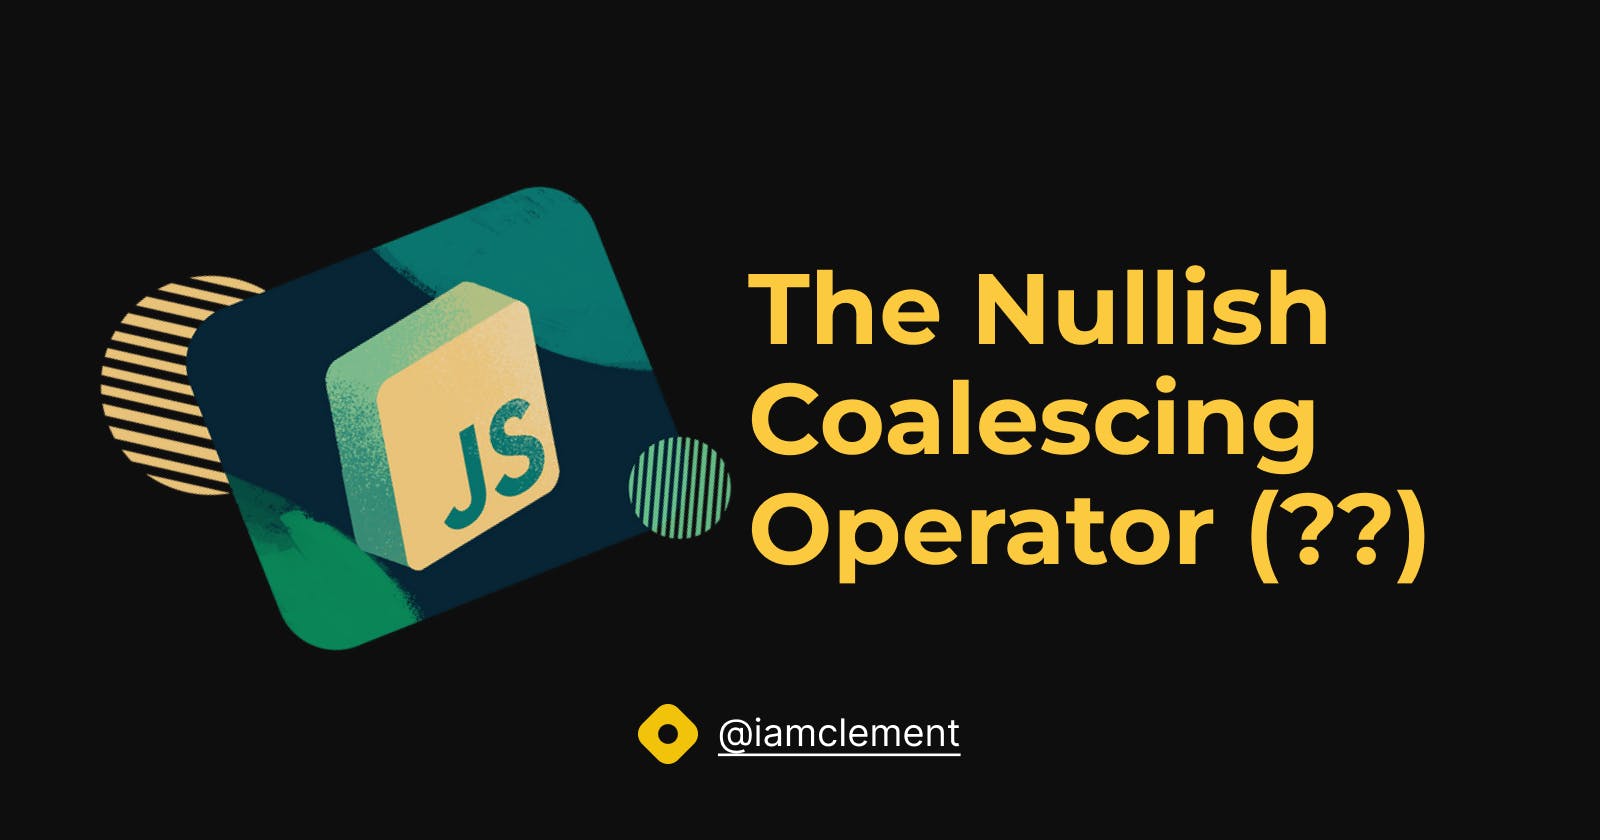 The Nullish Coalescing Operator in JavaScript